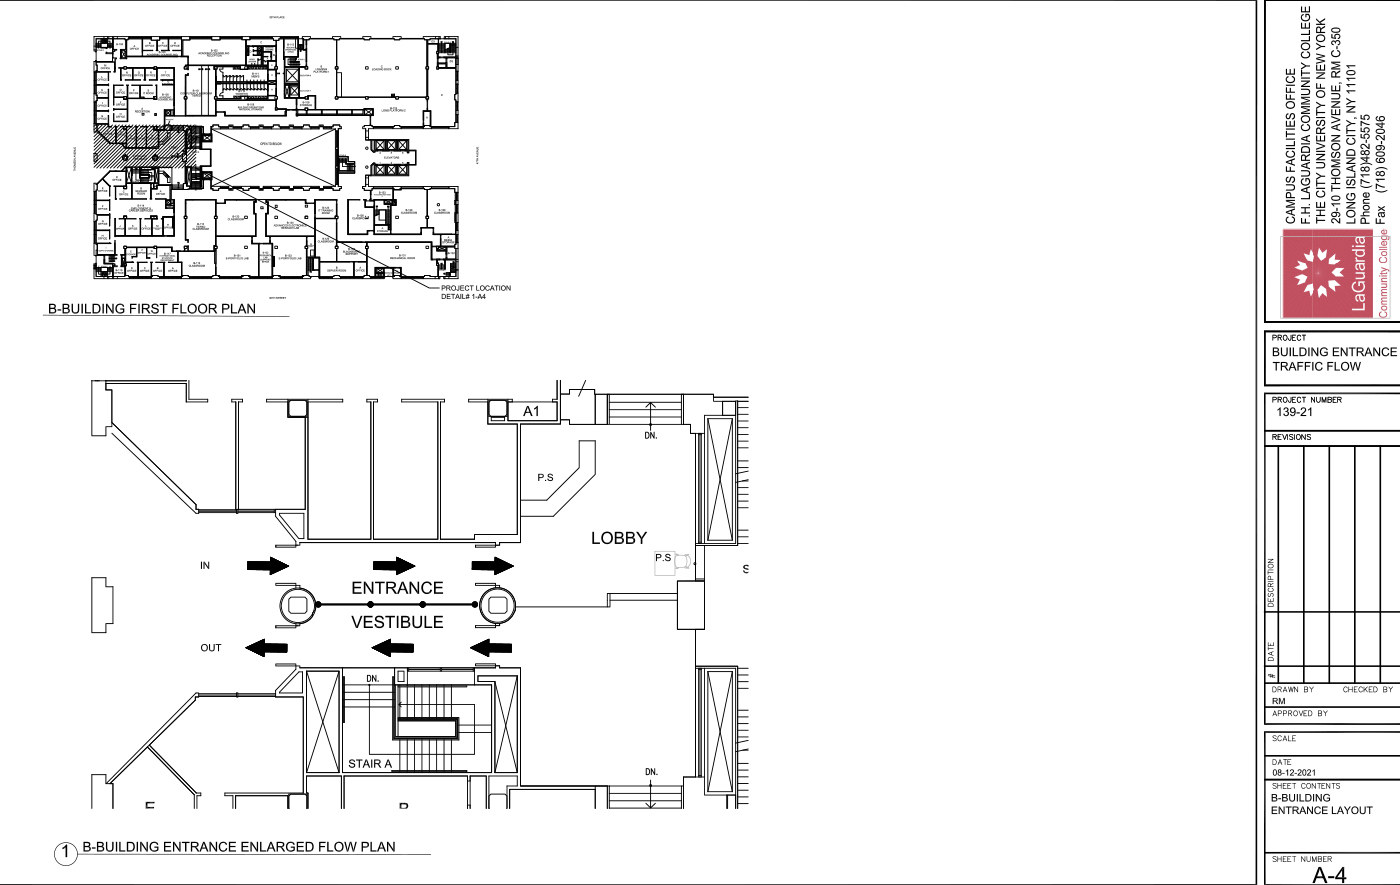 LaGuardia's campus facilities office_center III 3rd floor classroom layout